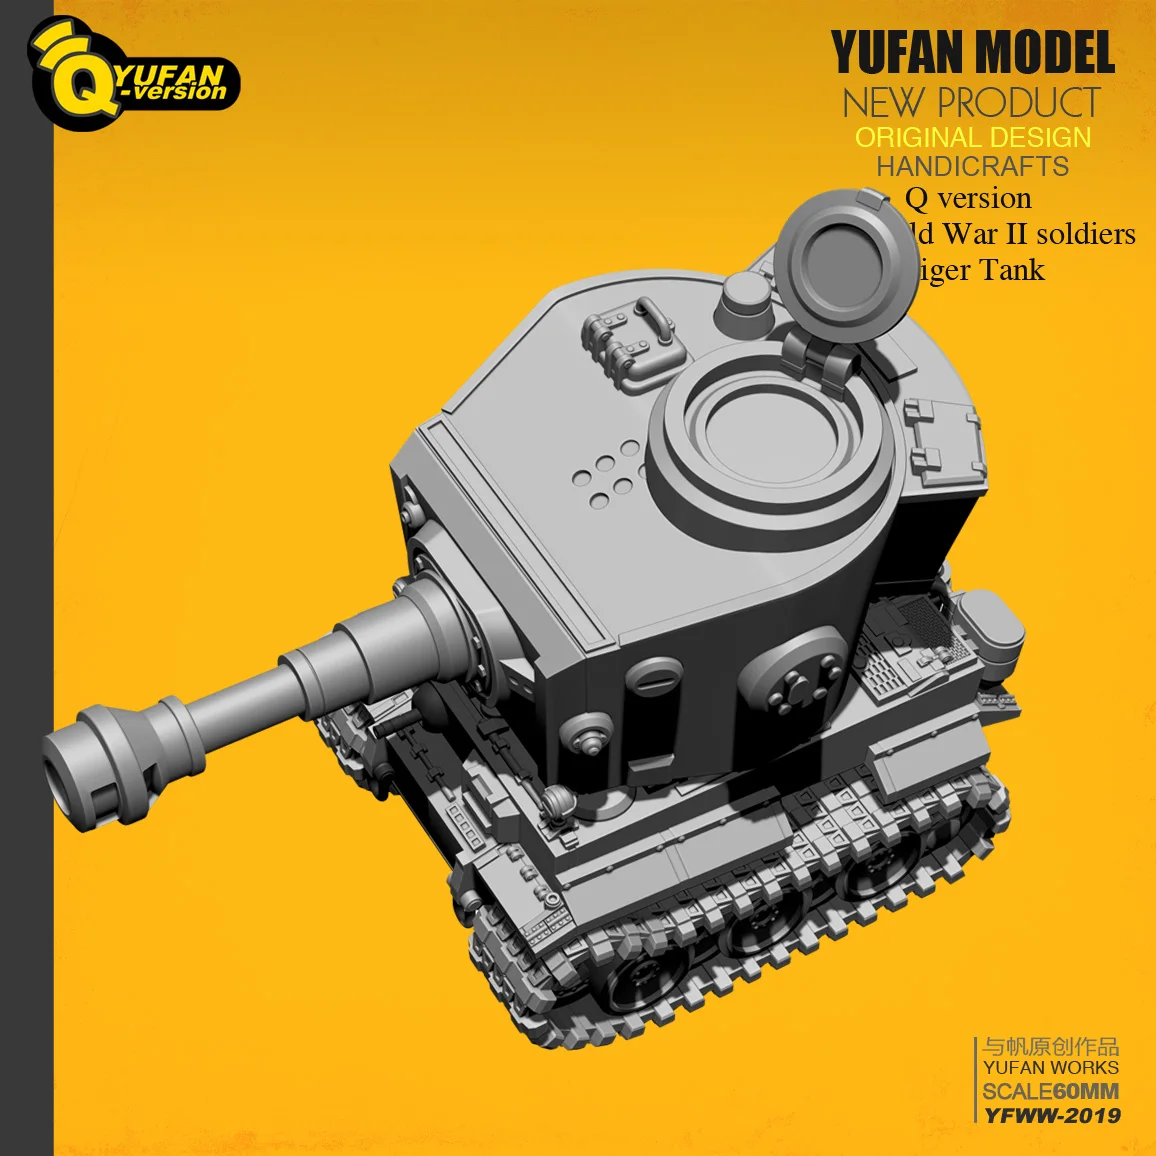 Yufan Modelis Q versija tiger tank derva modelis Yfww-2019